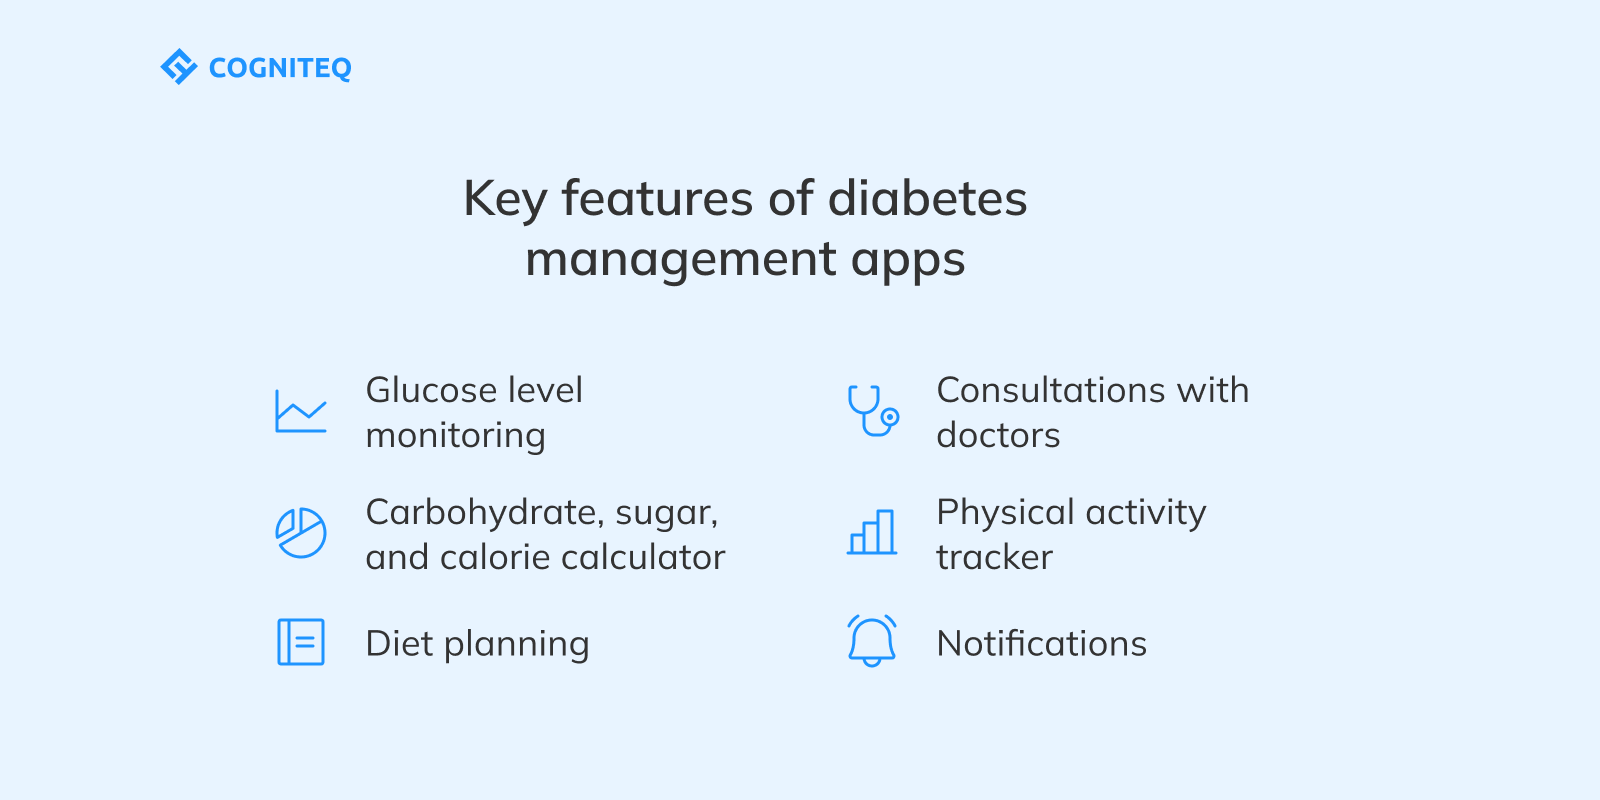 Key features of diabetes management apps